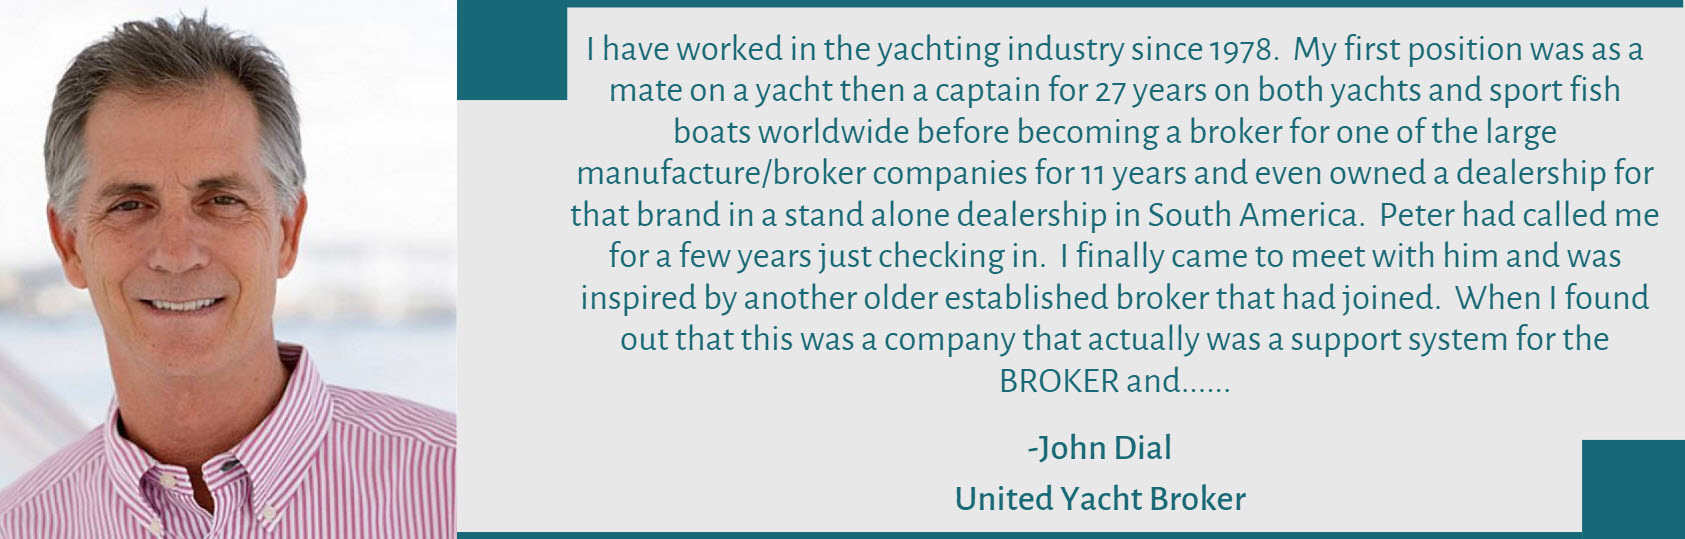 Yacht Broker John Dial